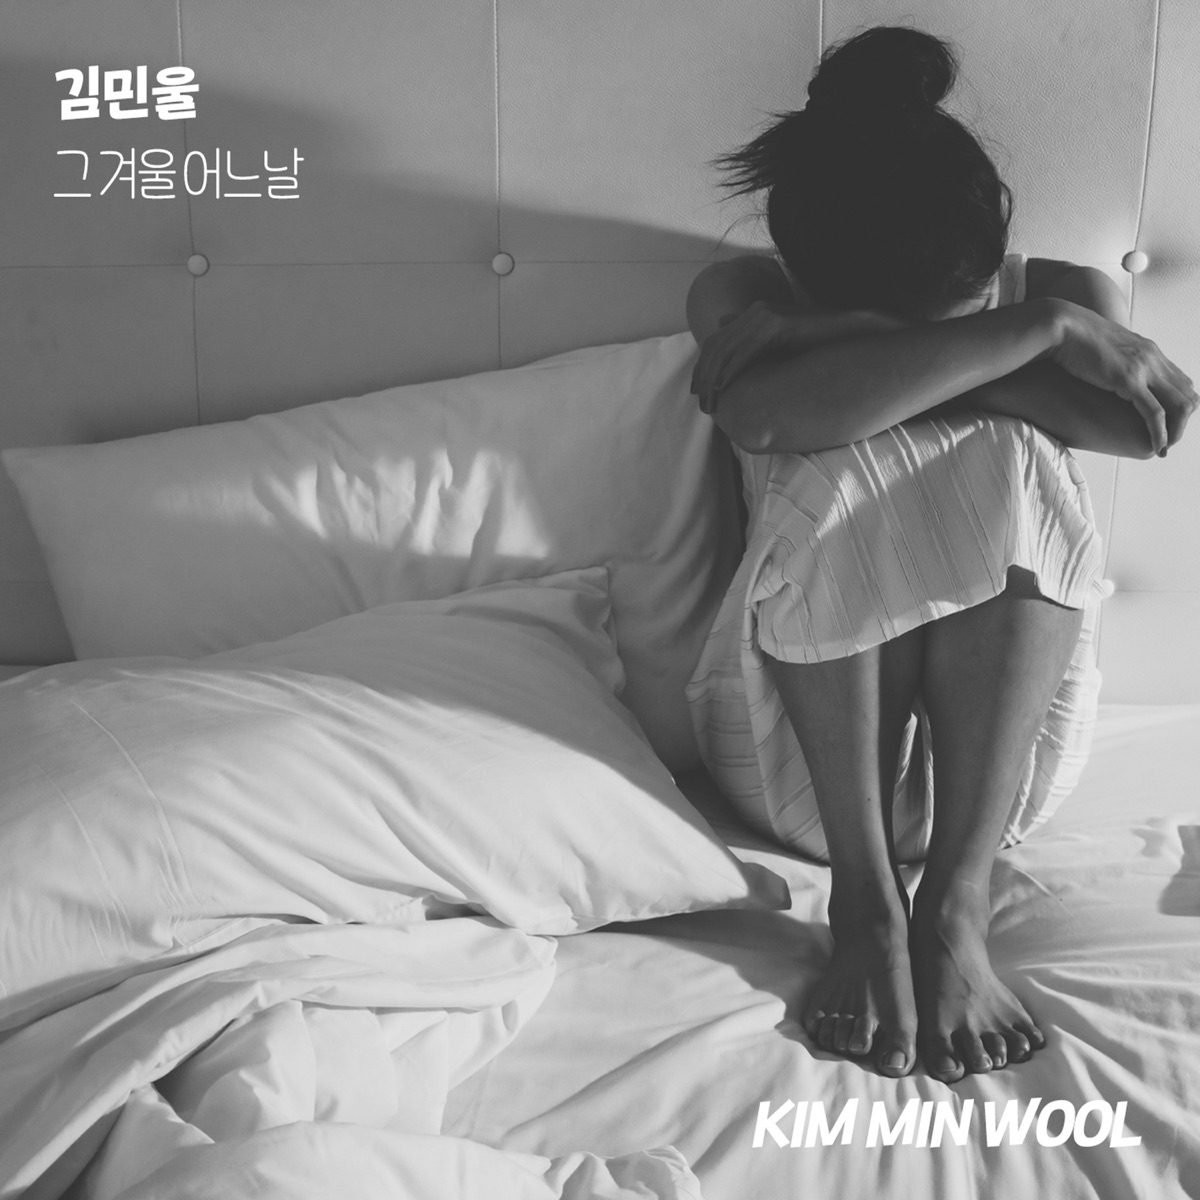 Kim Min Wool – one day in the winter – Single